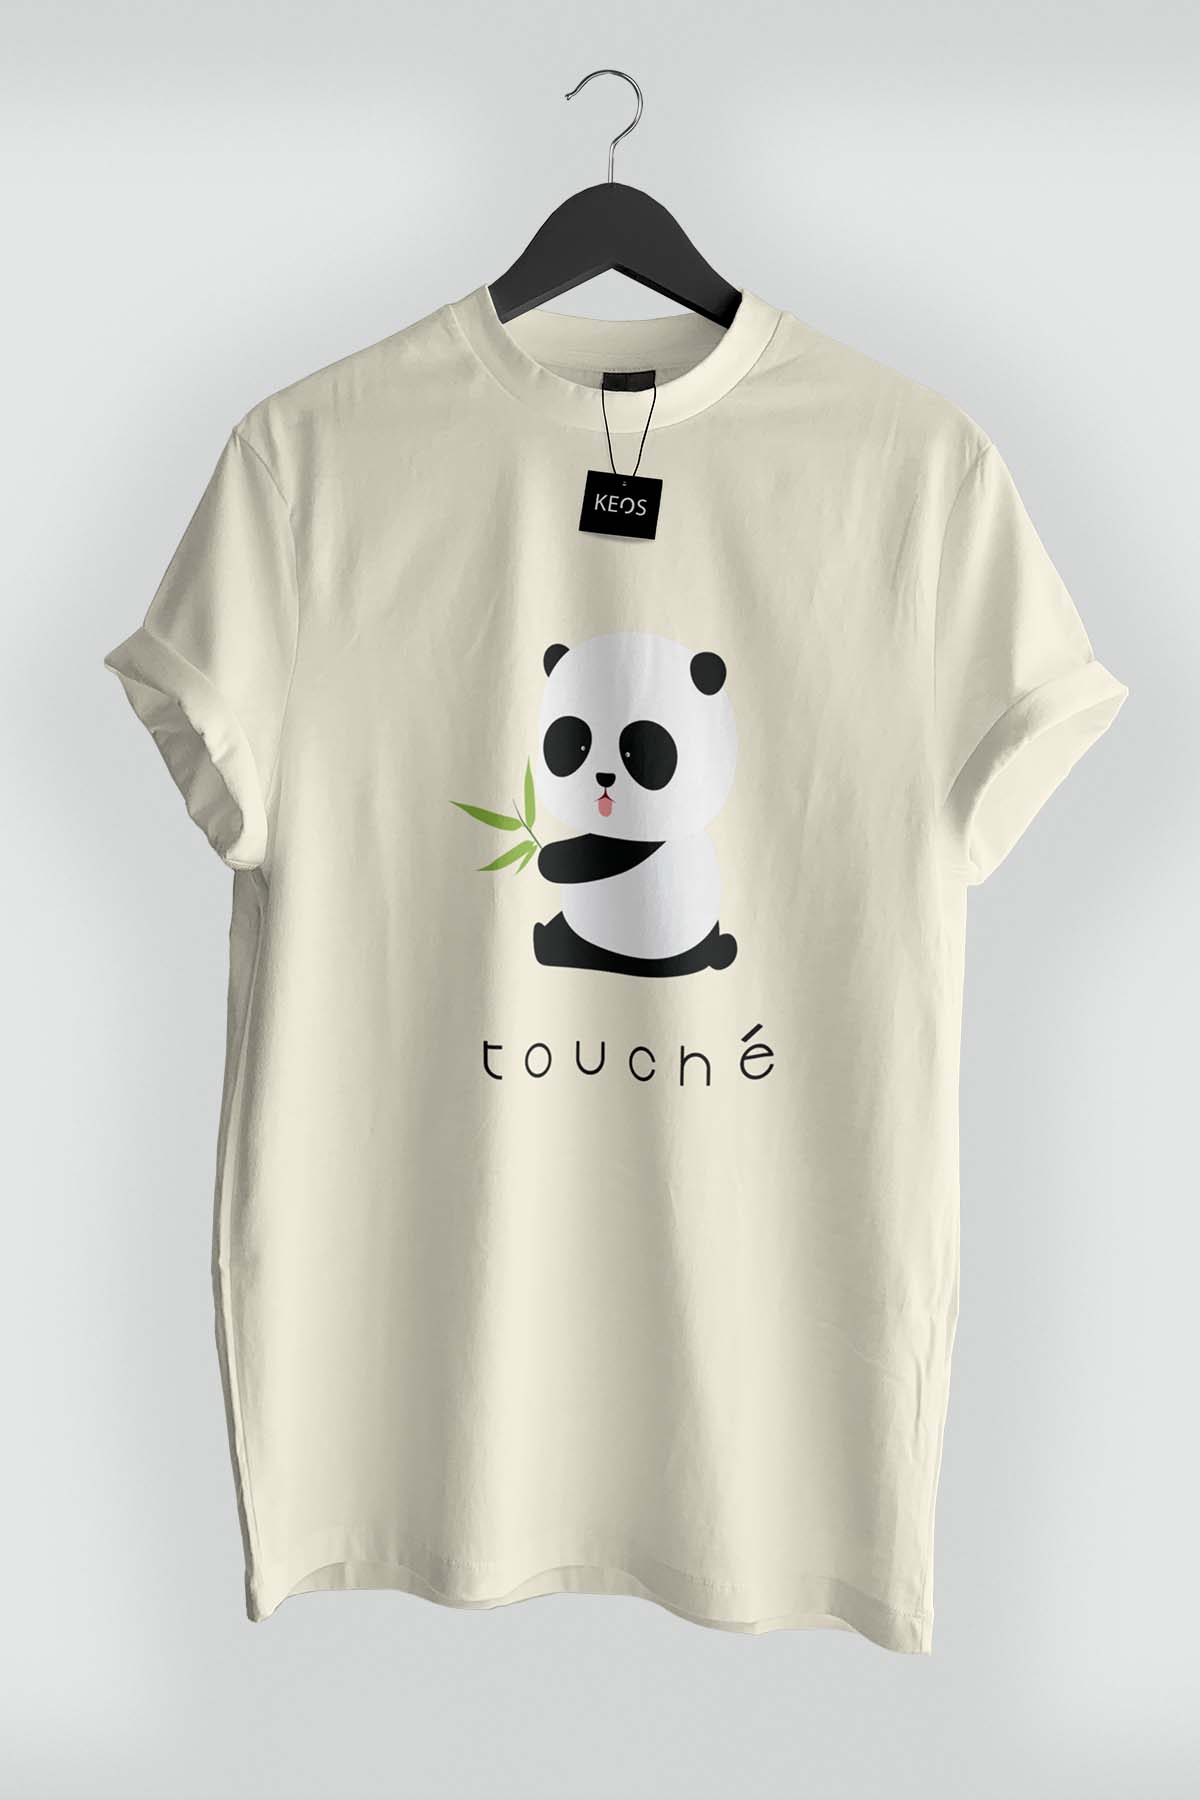 Touché Organic Cotton T-shirt - keos.life